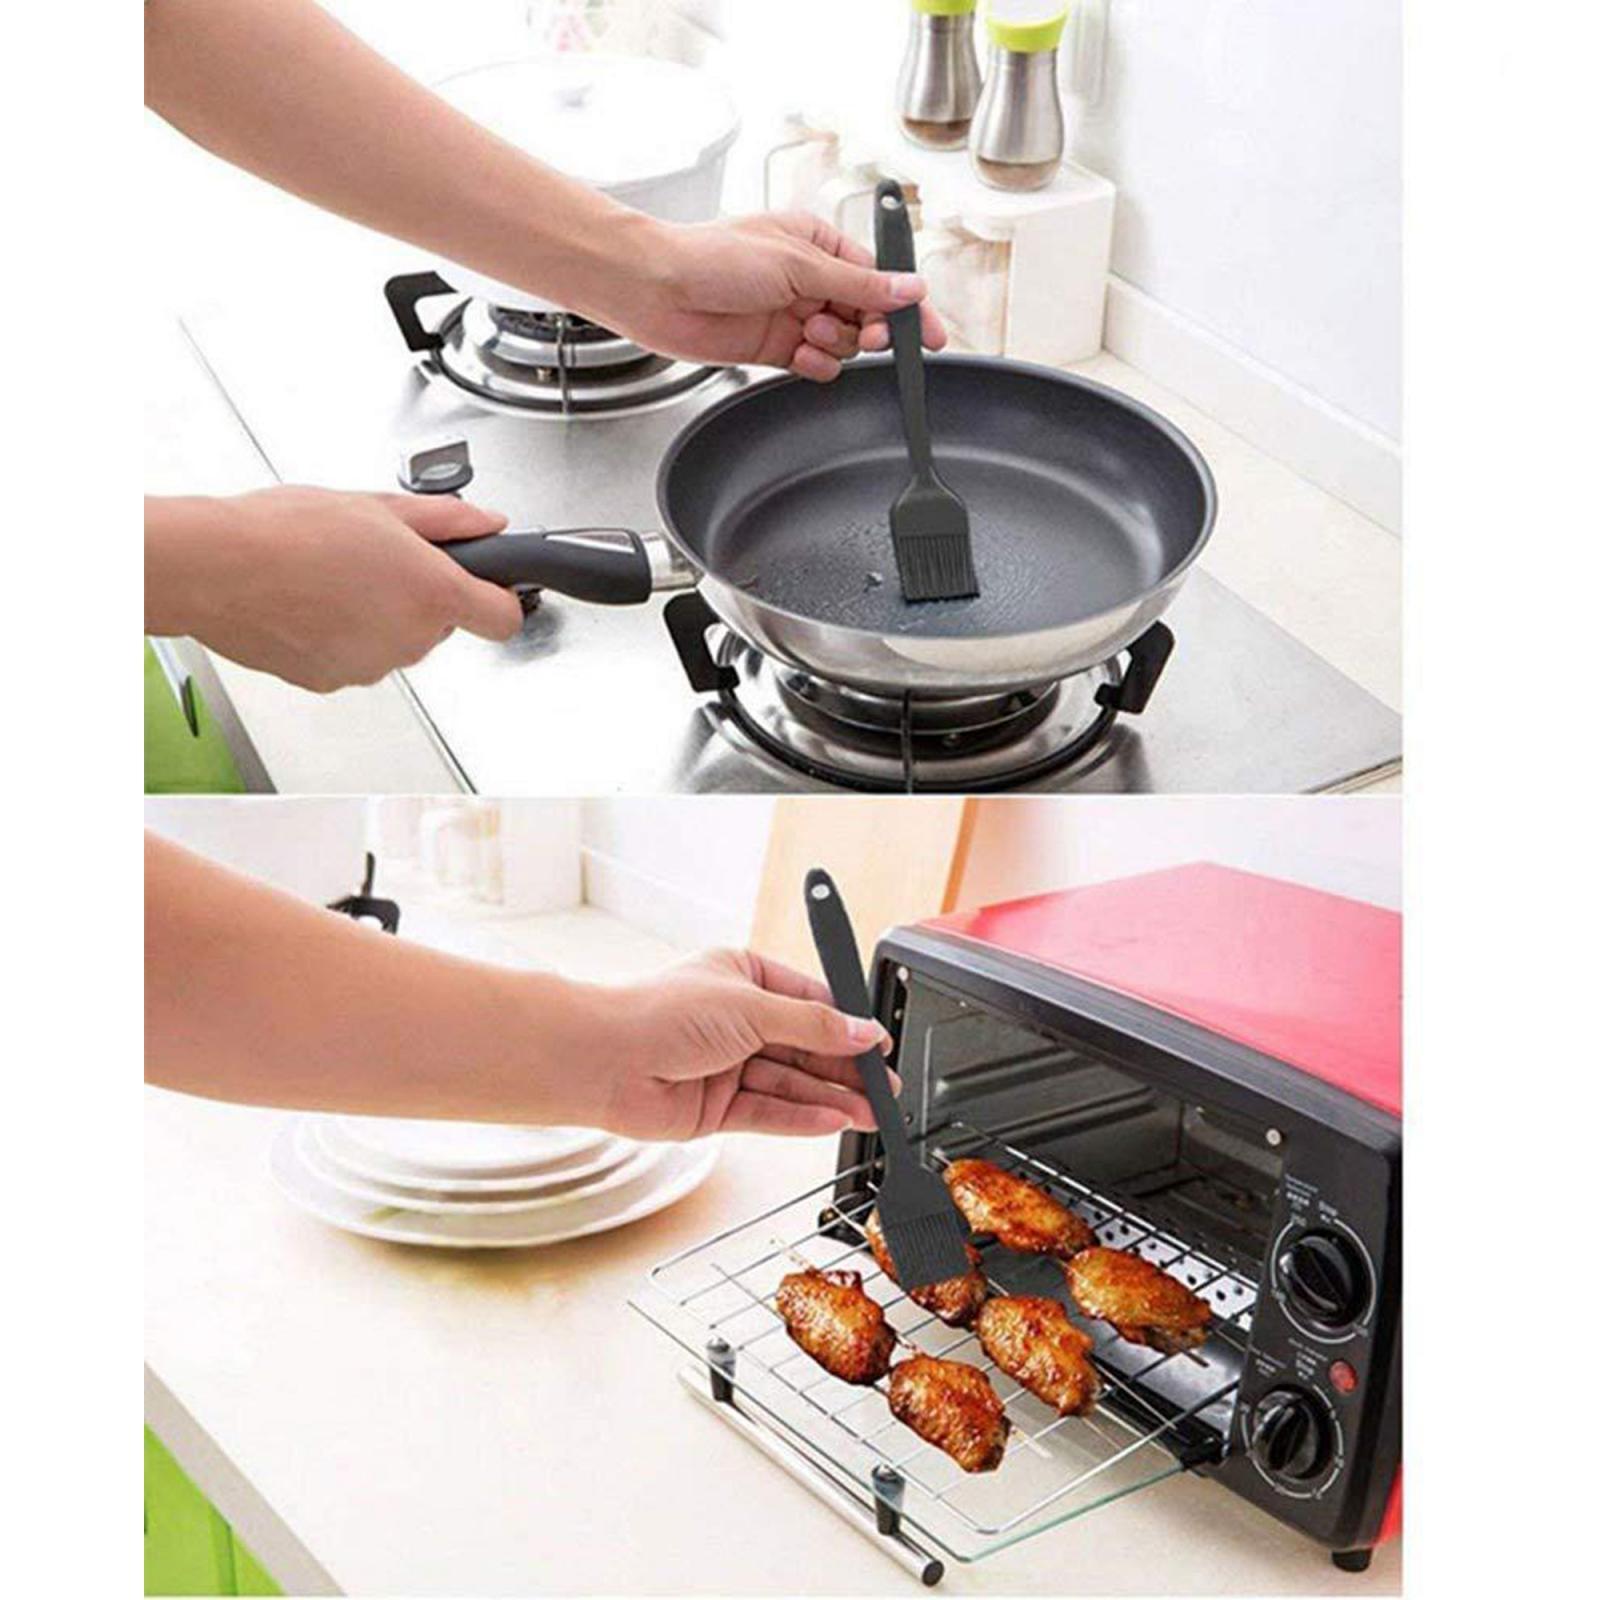 Silicone Spatulas, Kitchen Utensils Heat Resistant Silicone Kitchenware, Non-Stick Kitchen Baking Cooking Tools, Kitchen Gadgets Utensil Sets